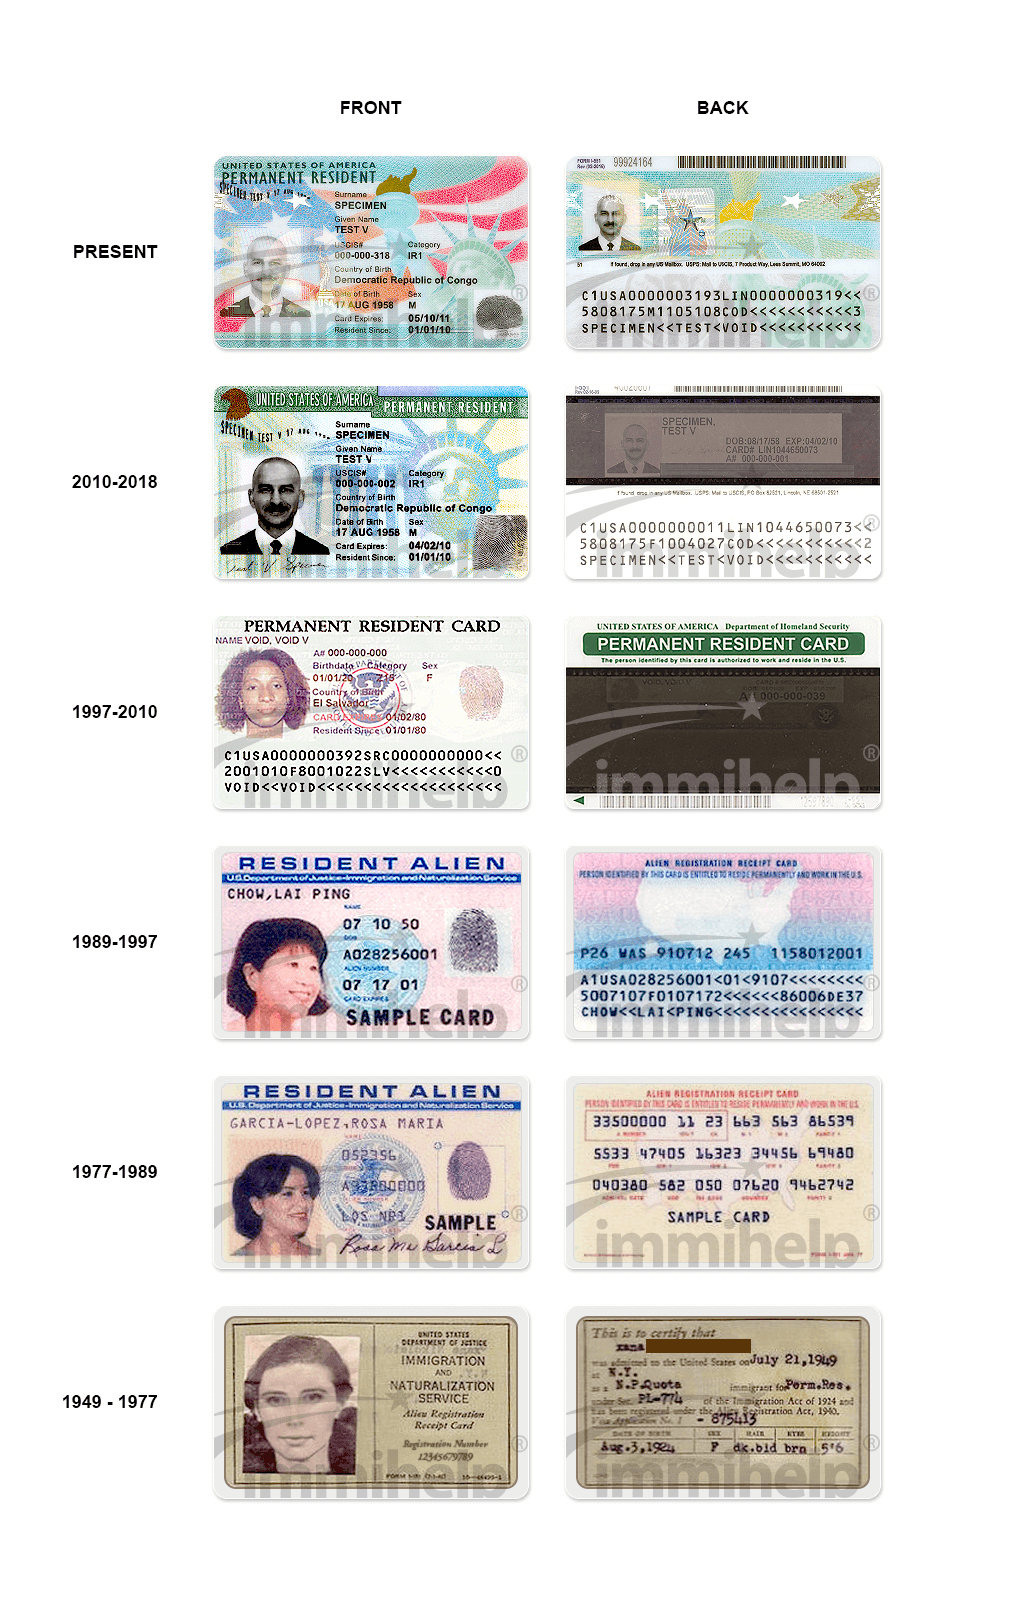 green card format